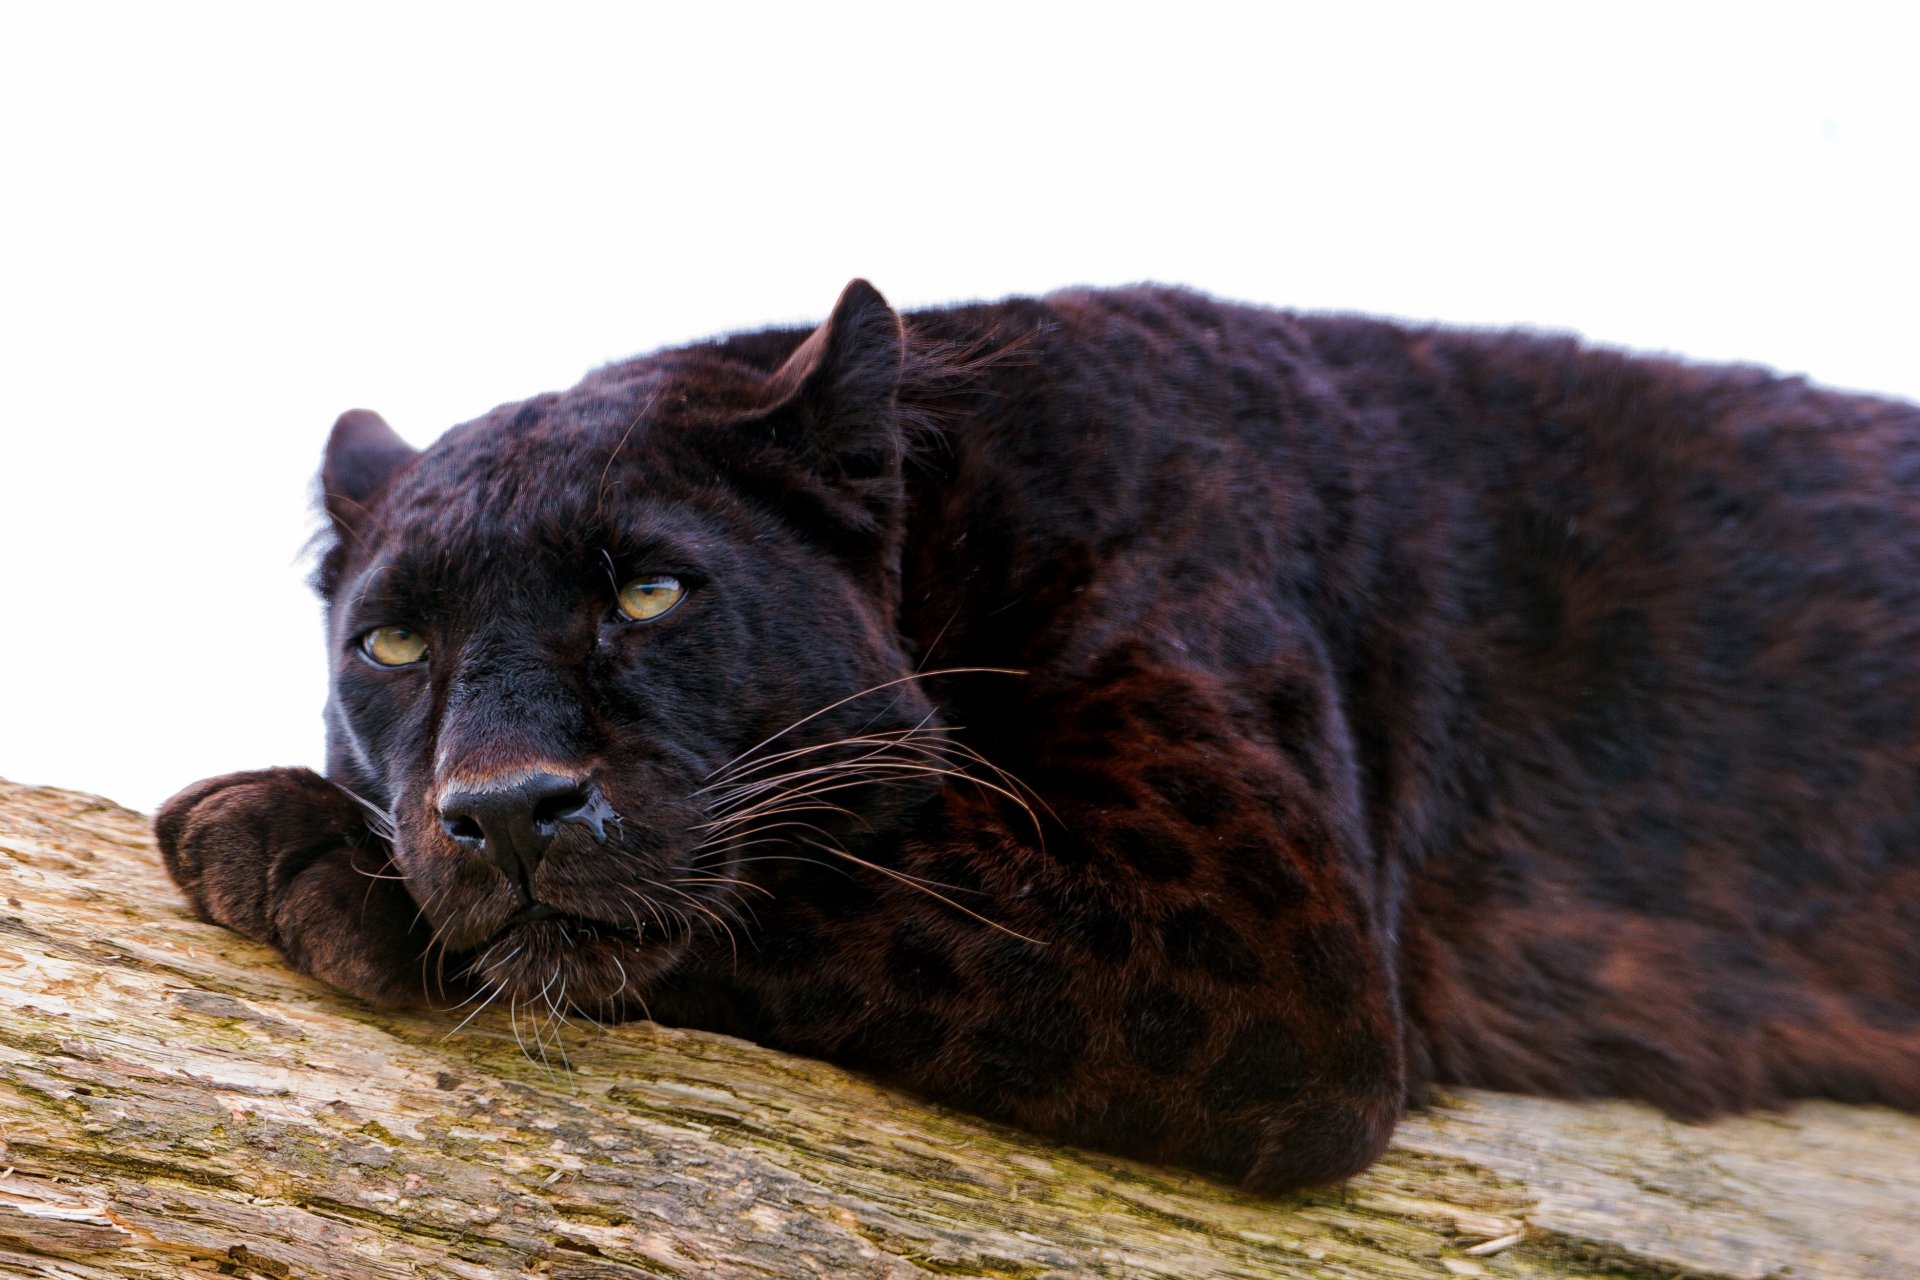 Black Panther 4k Ultra HD Wallpaper | Background Image ...